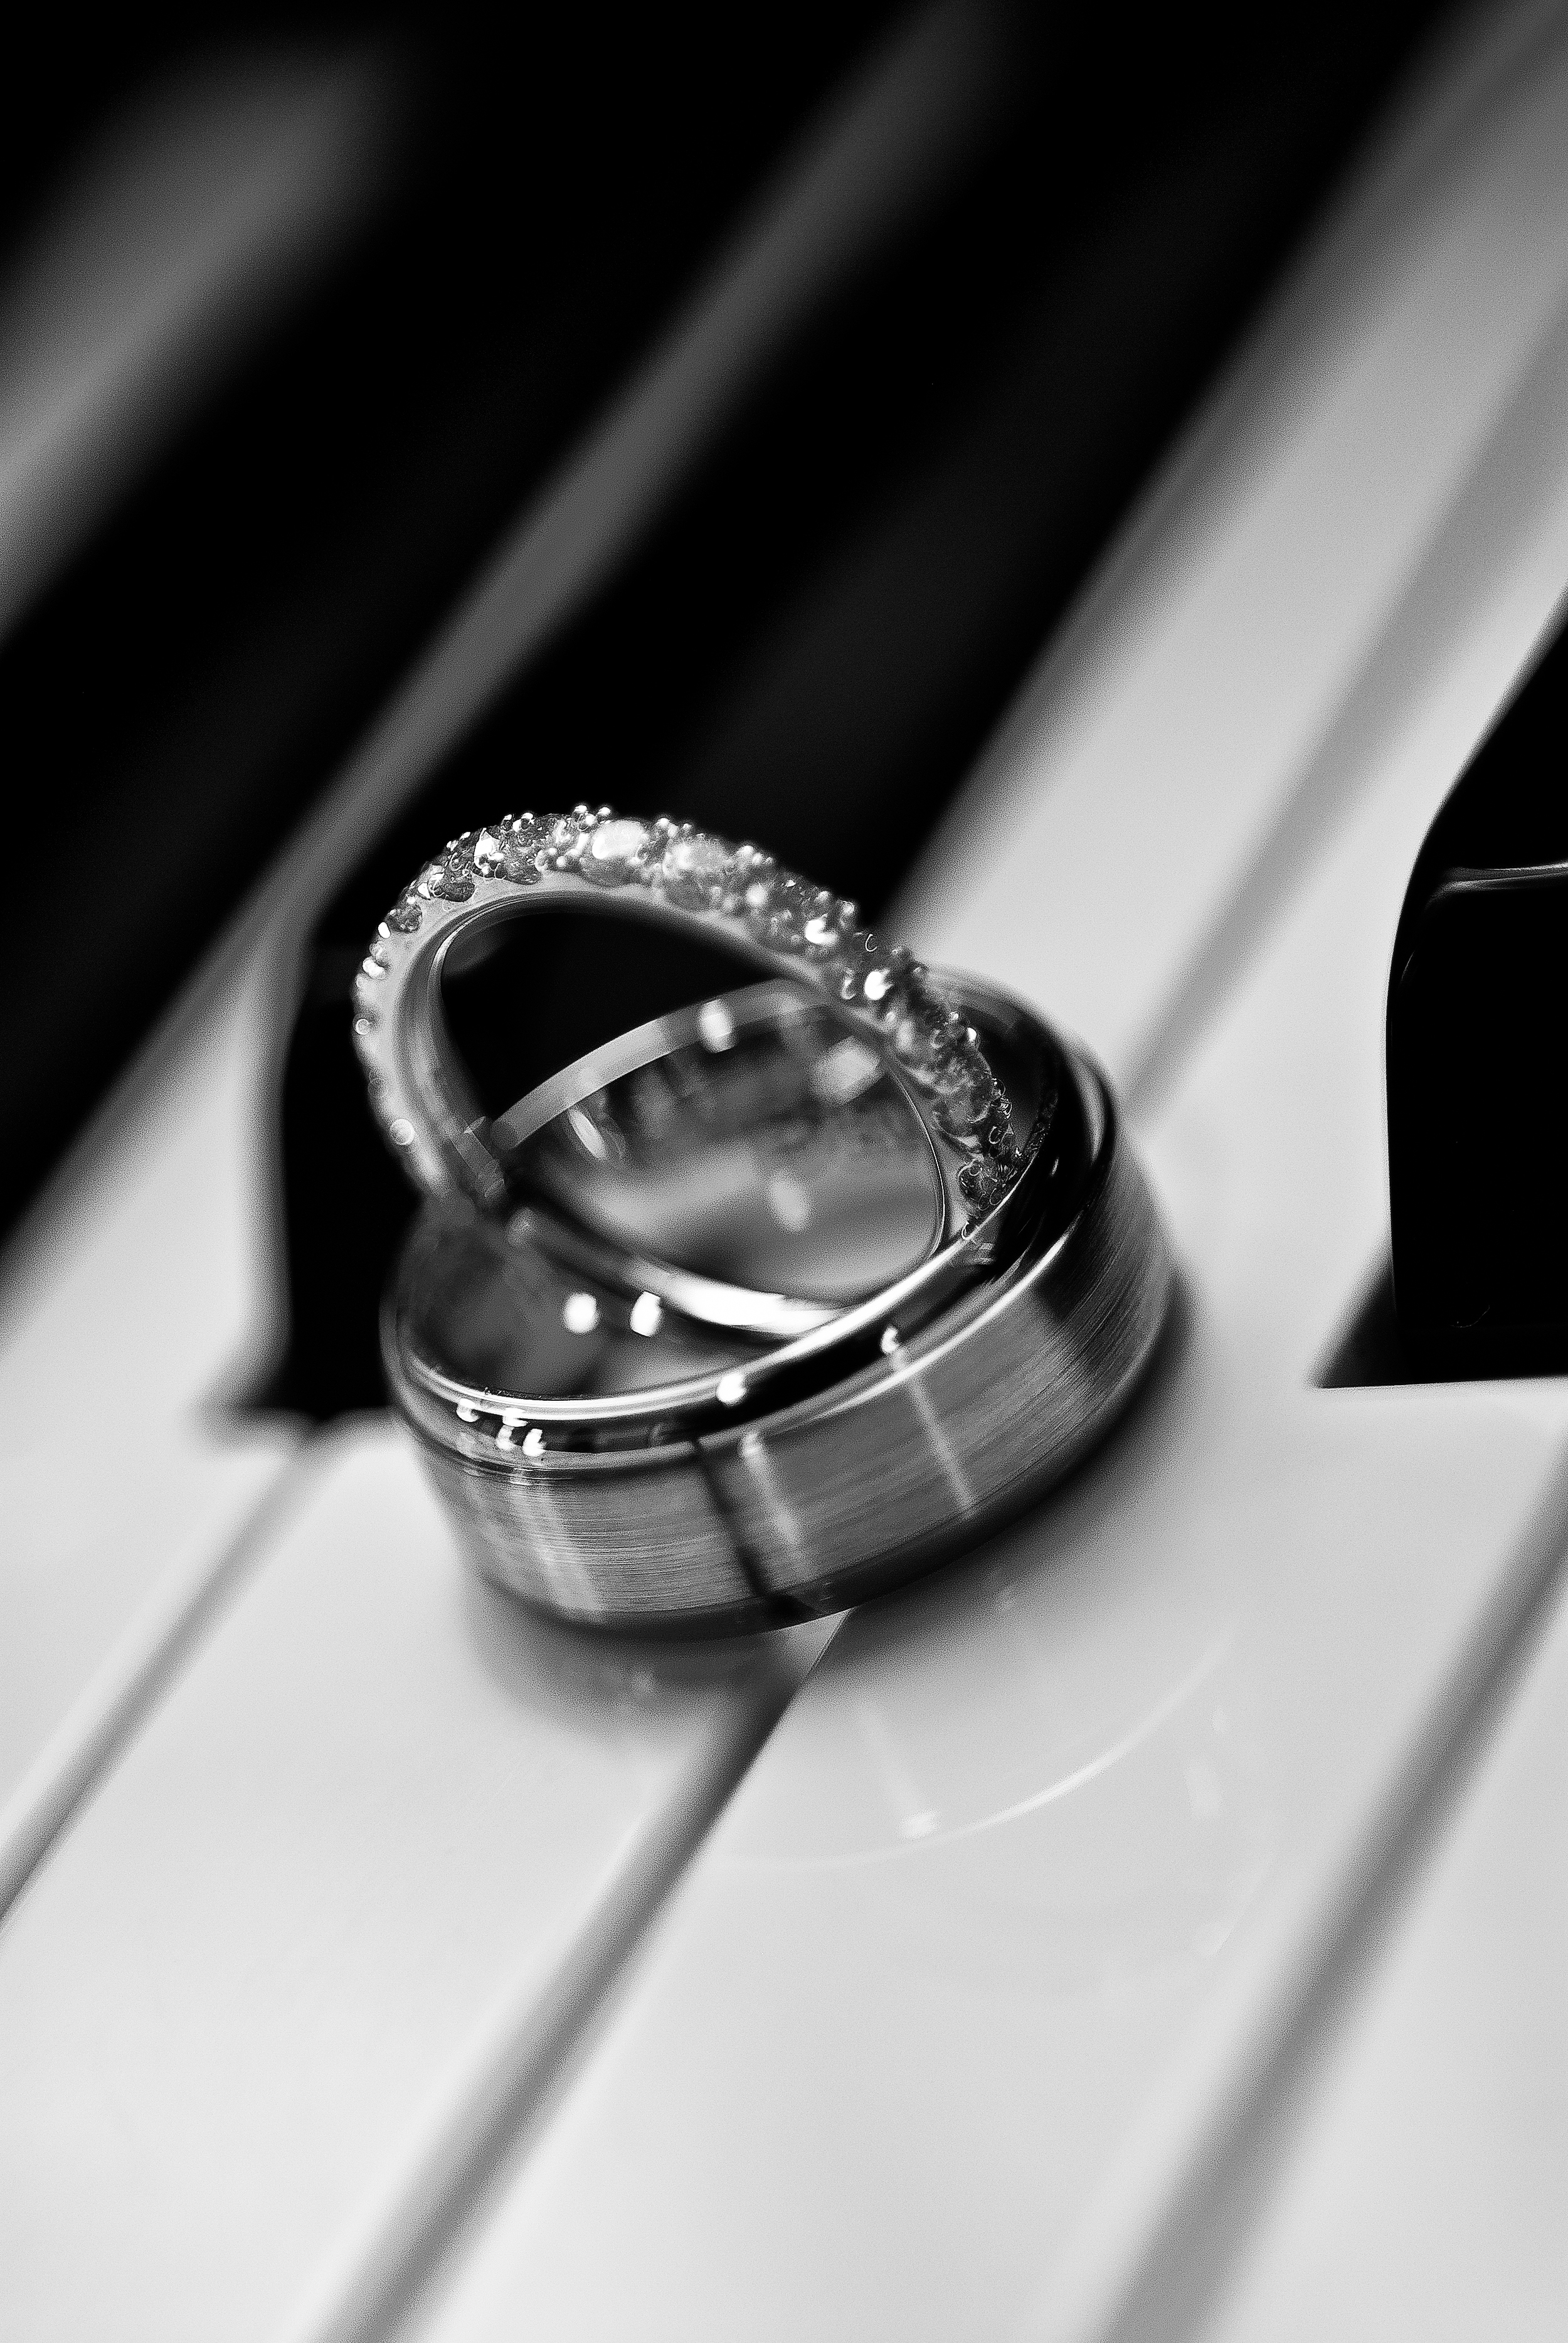 Wedding Rings on Piano at a Wedding - Peter Farrar